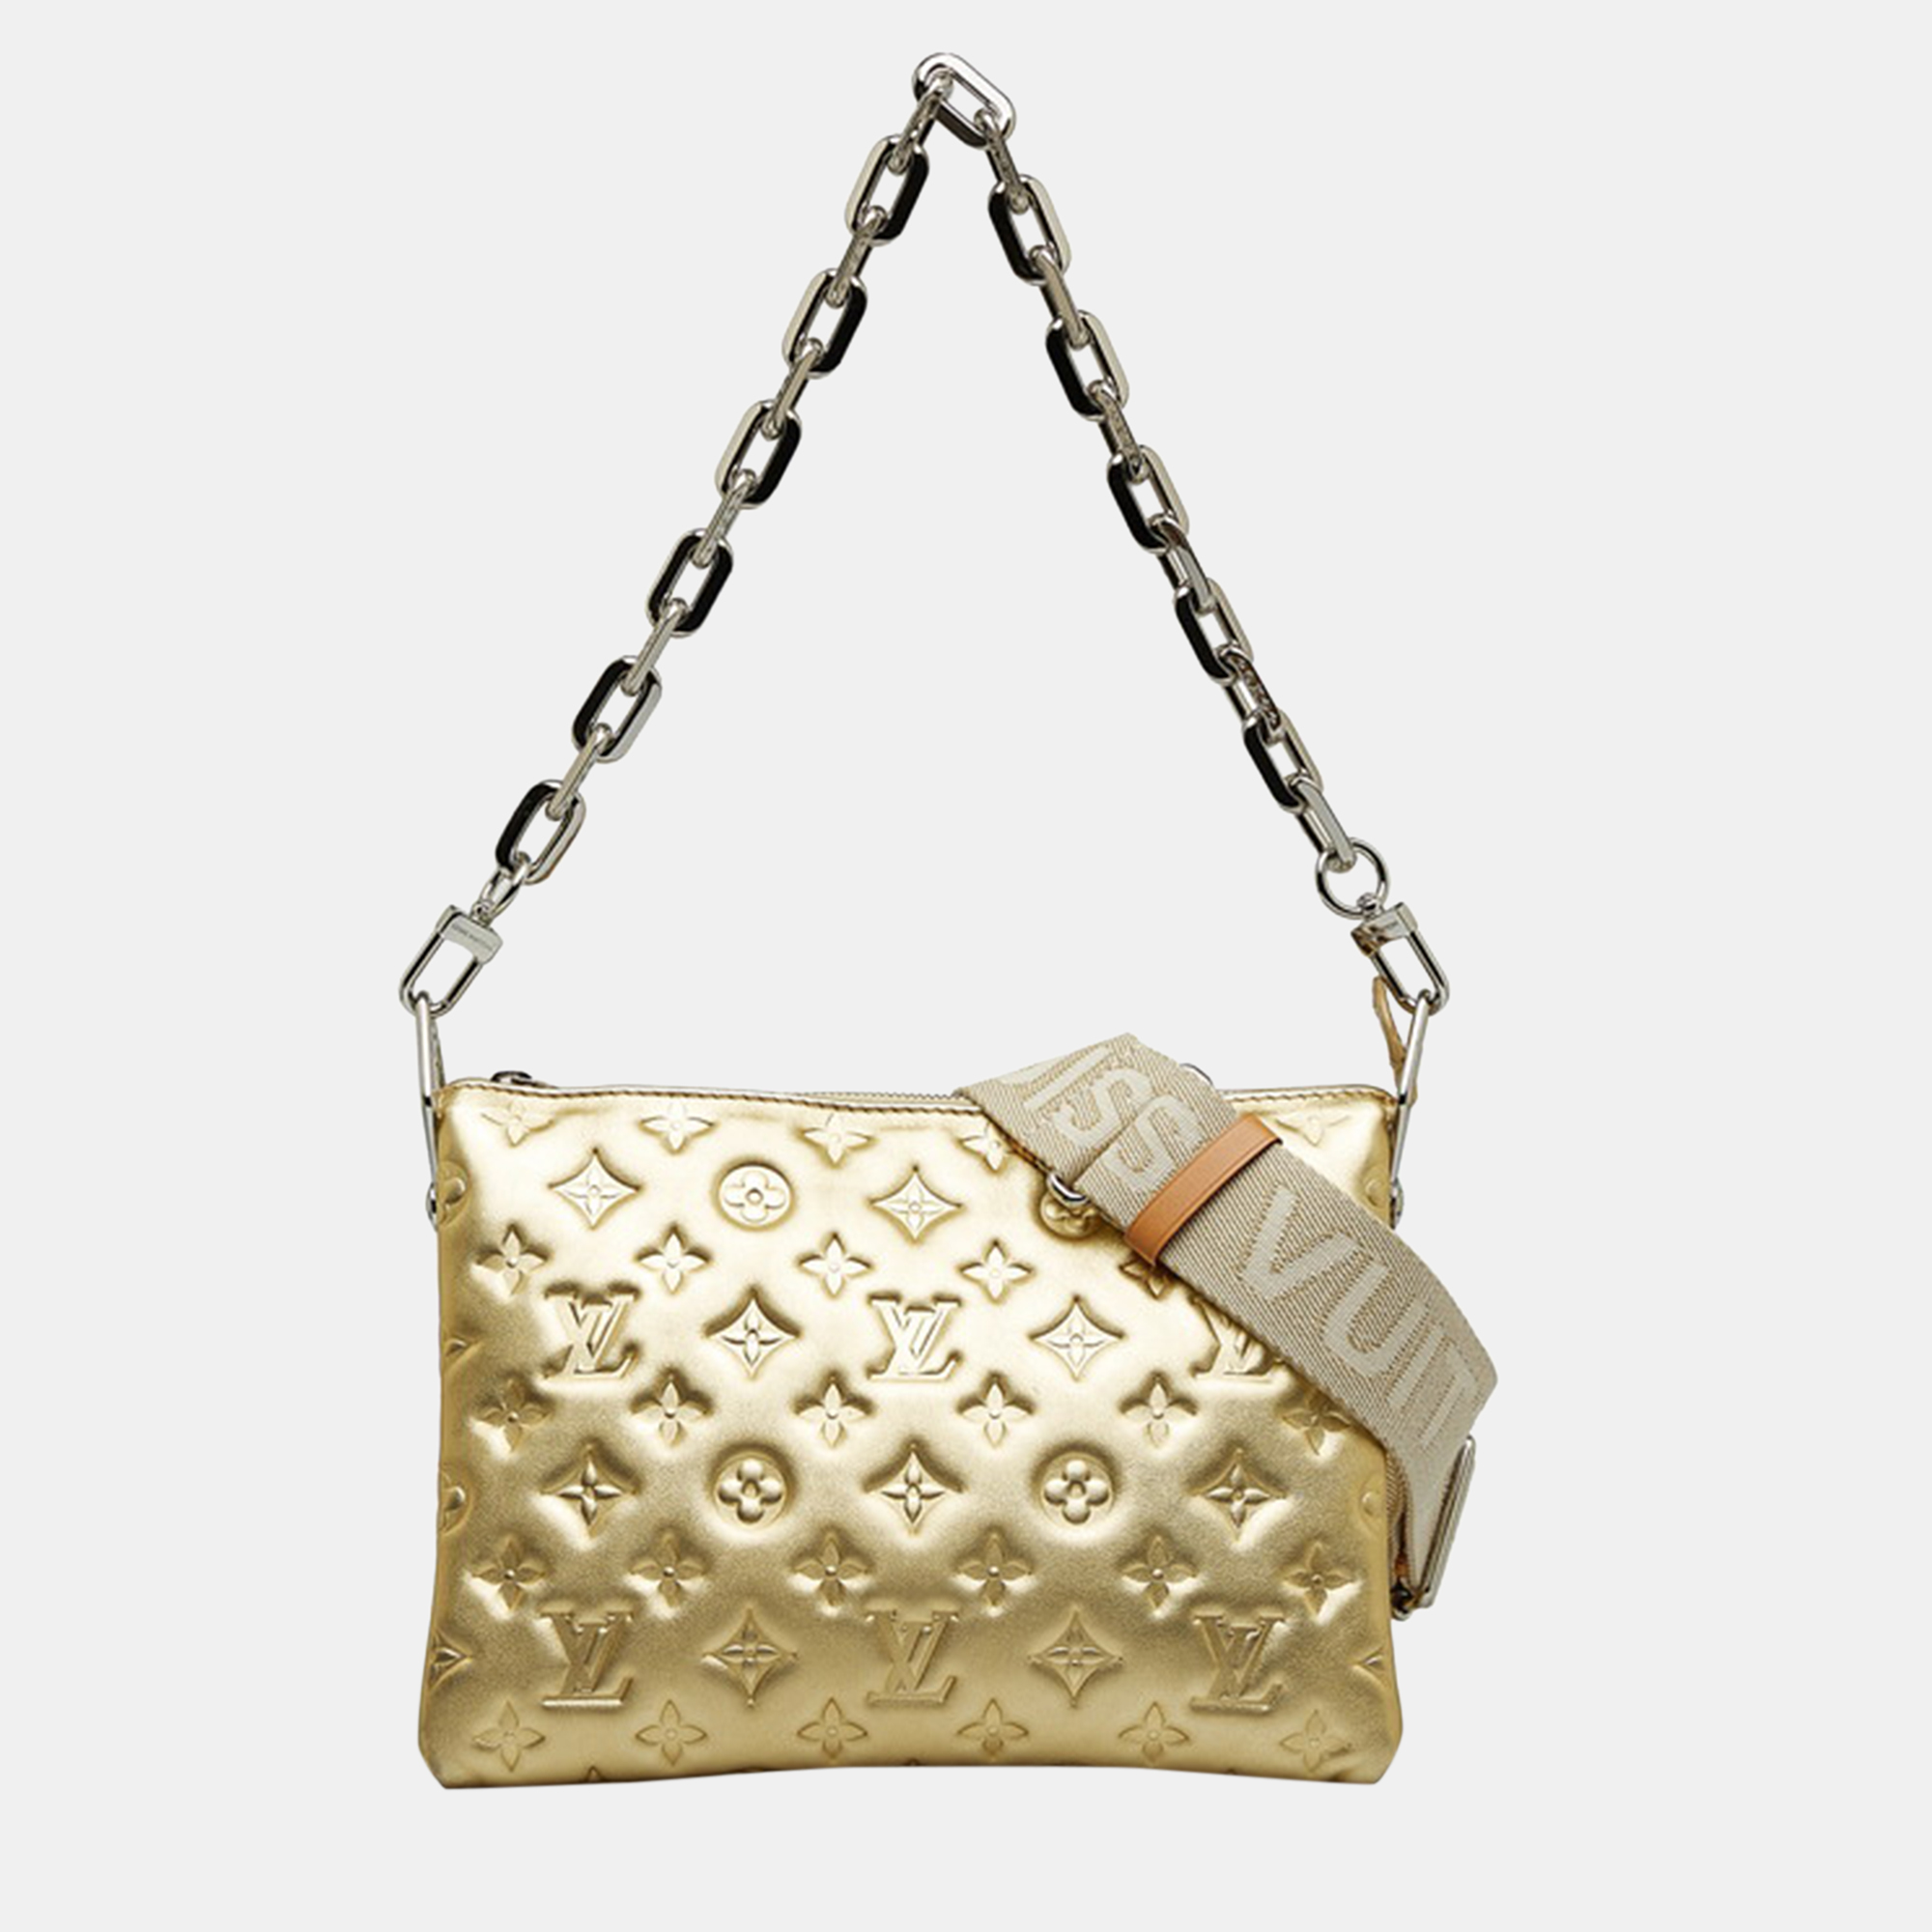 Louis vuitton gold leather monogram embossed coussin pm satchel bag